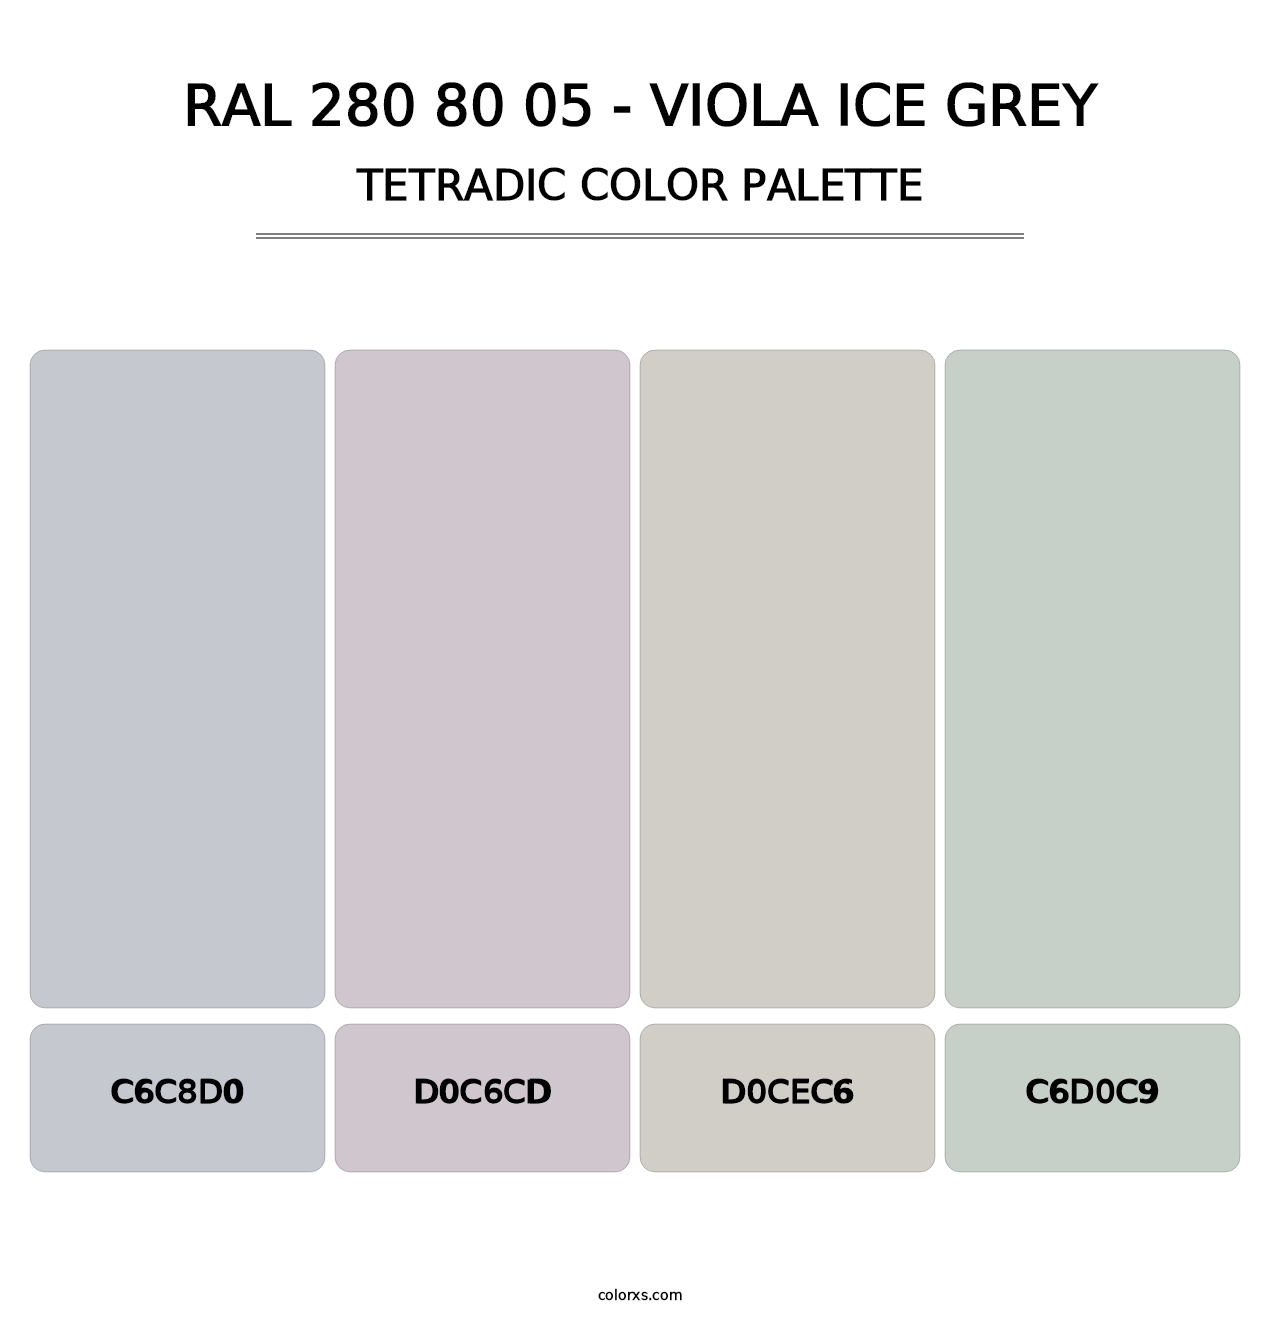 RAL 280 80 05 - Viola Ice Grey - Tetradic Color Palette